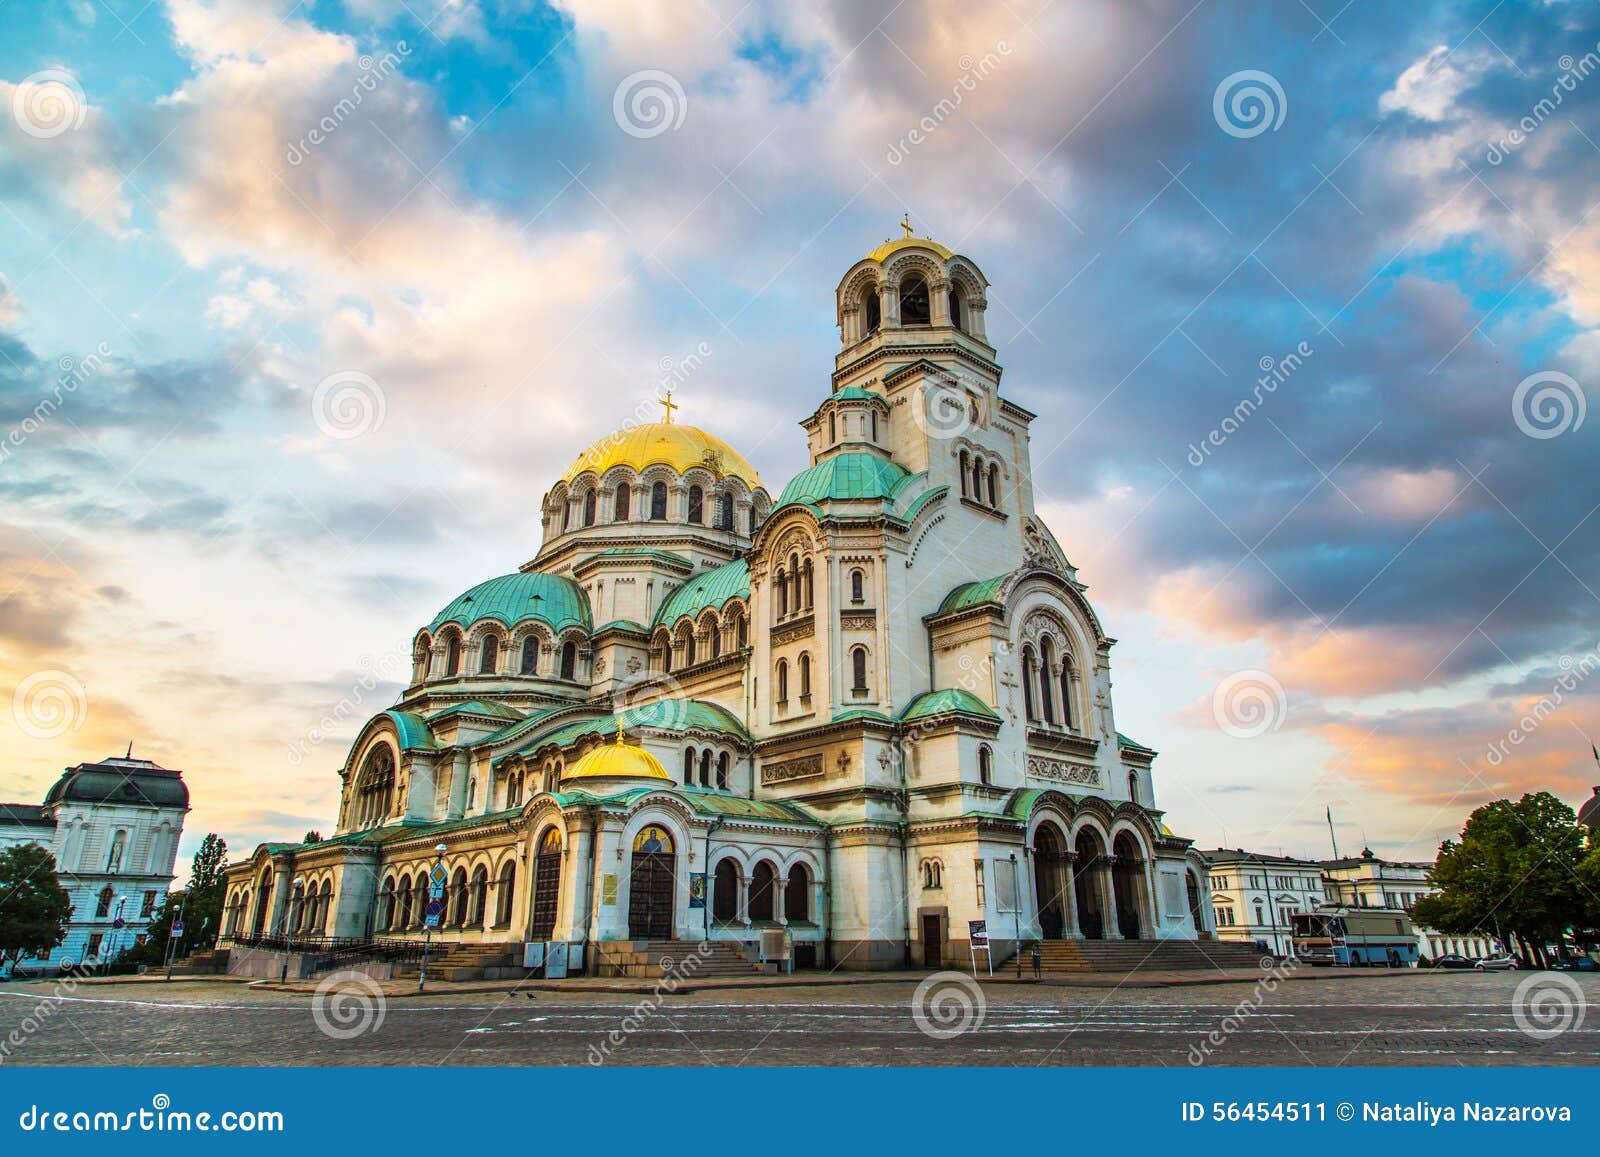 st. alexander nevski cathedral in sofia, bulgaria